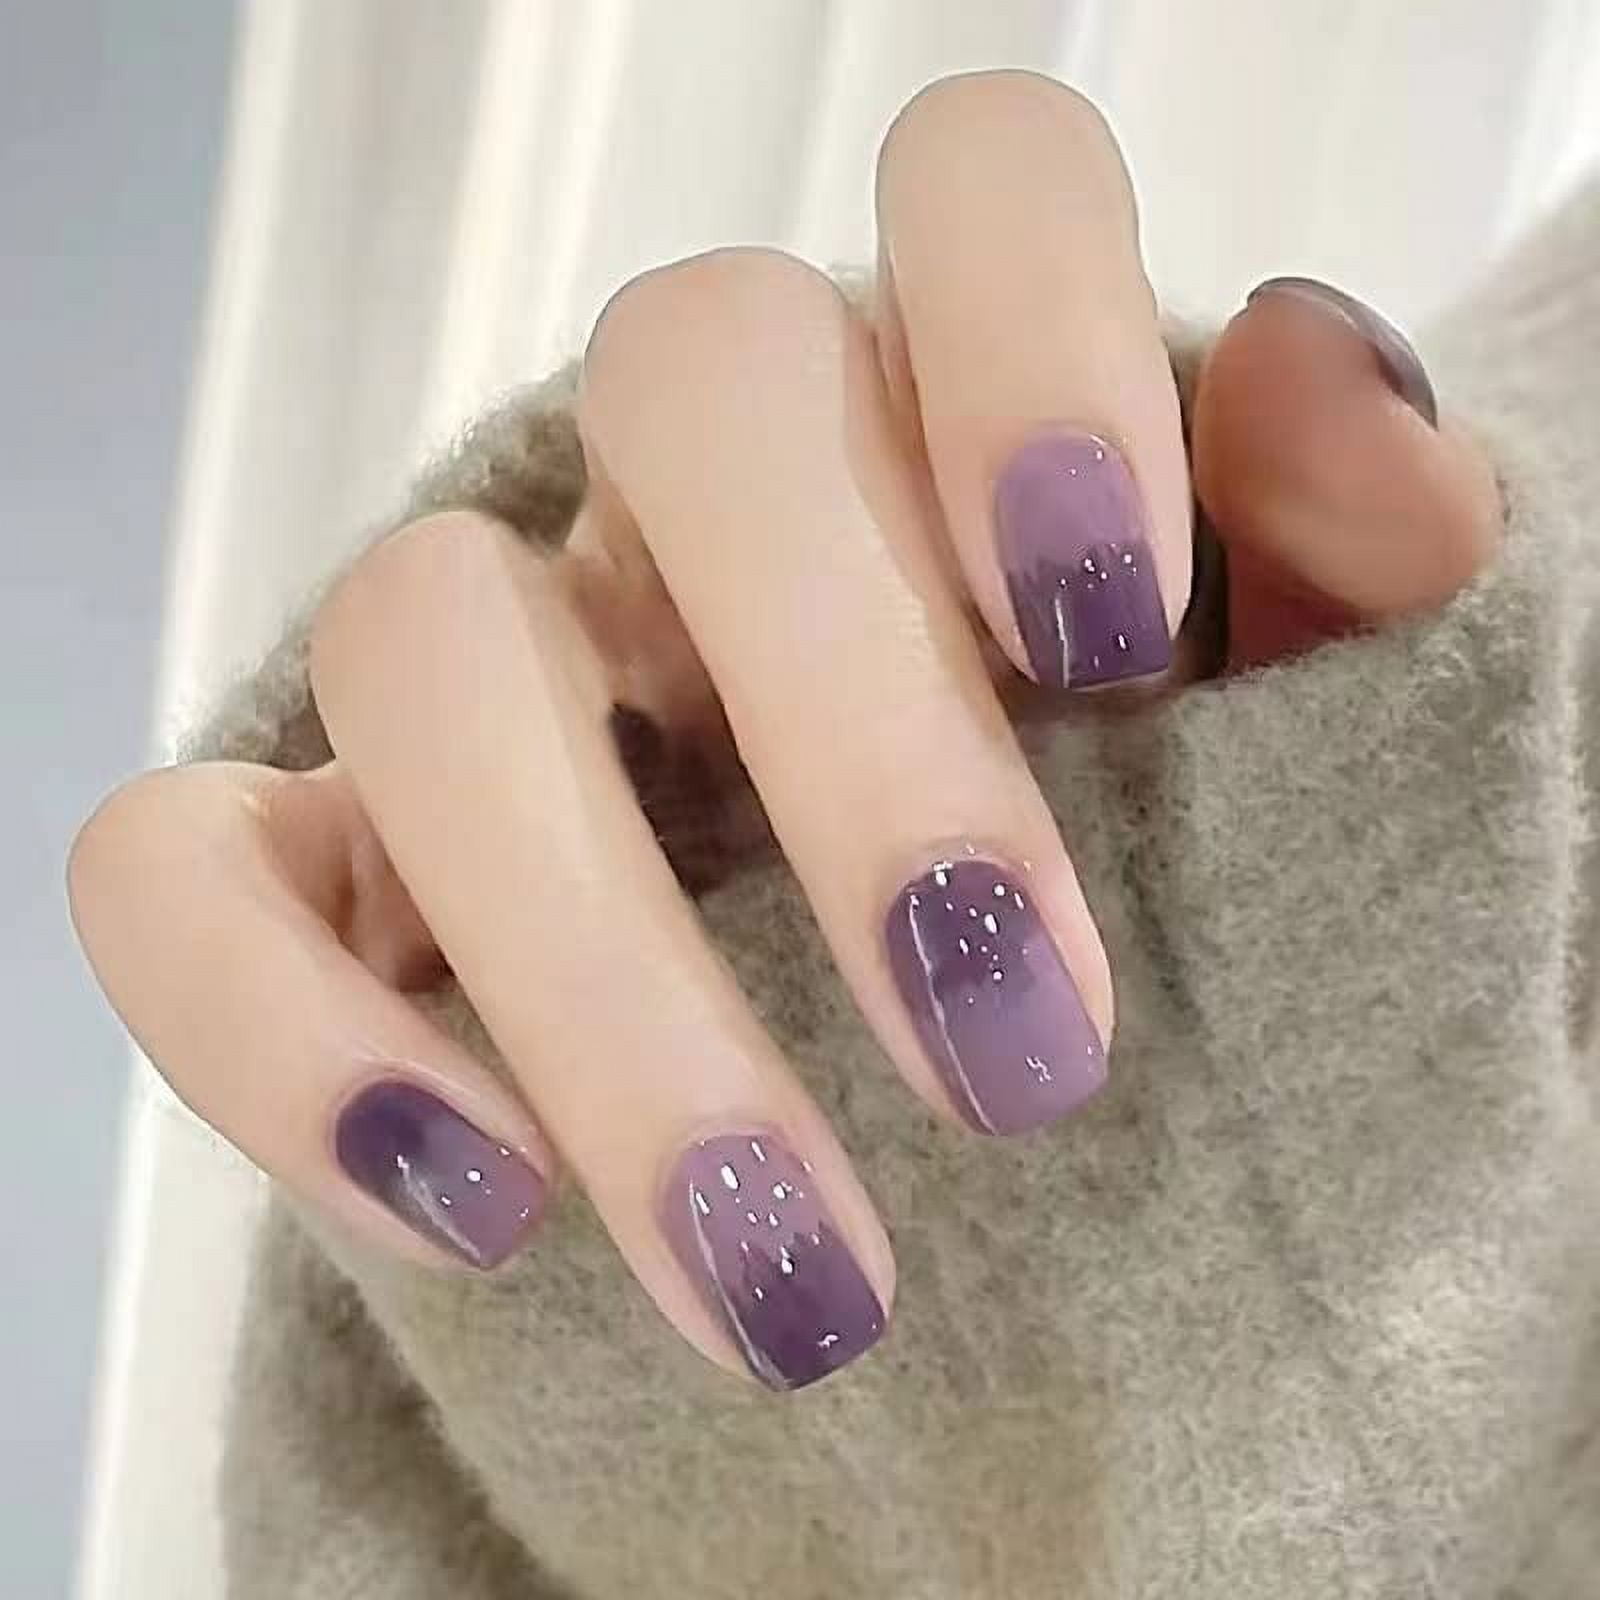 Funky purple nails : r/NailArt